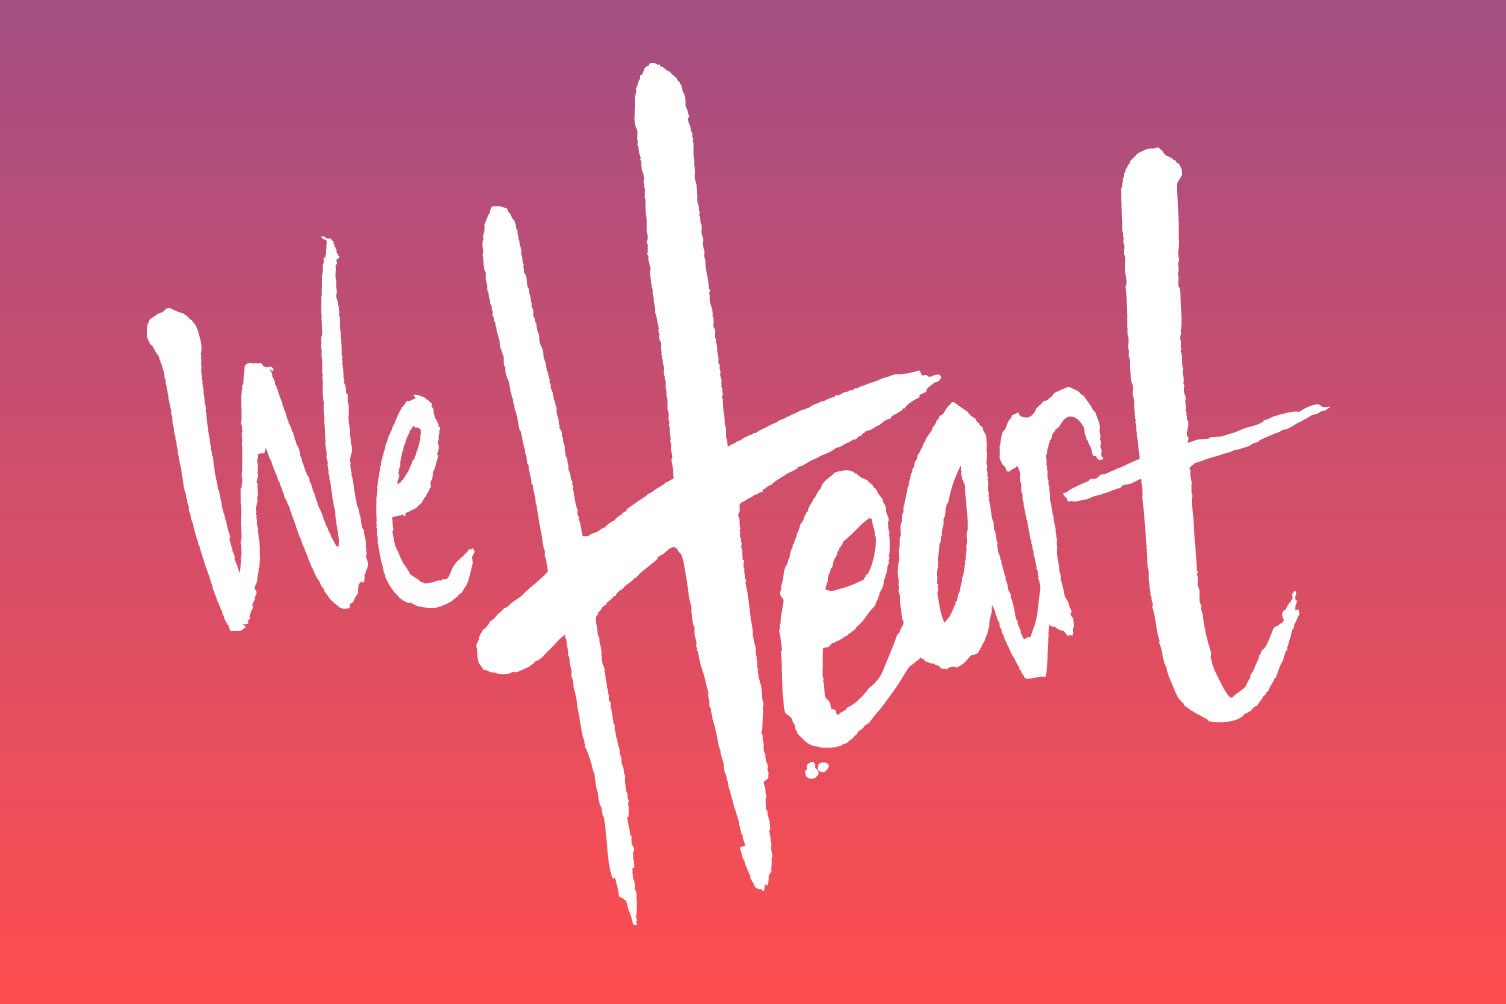 (c) We-heart.com